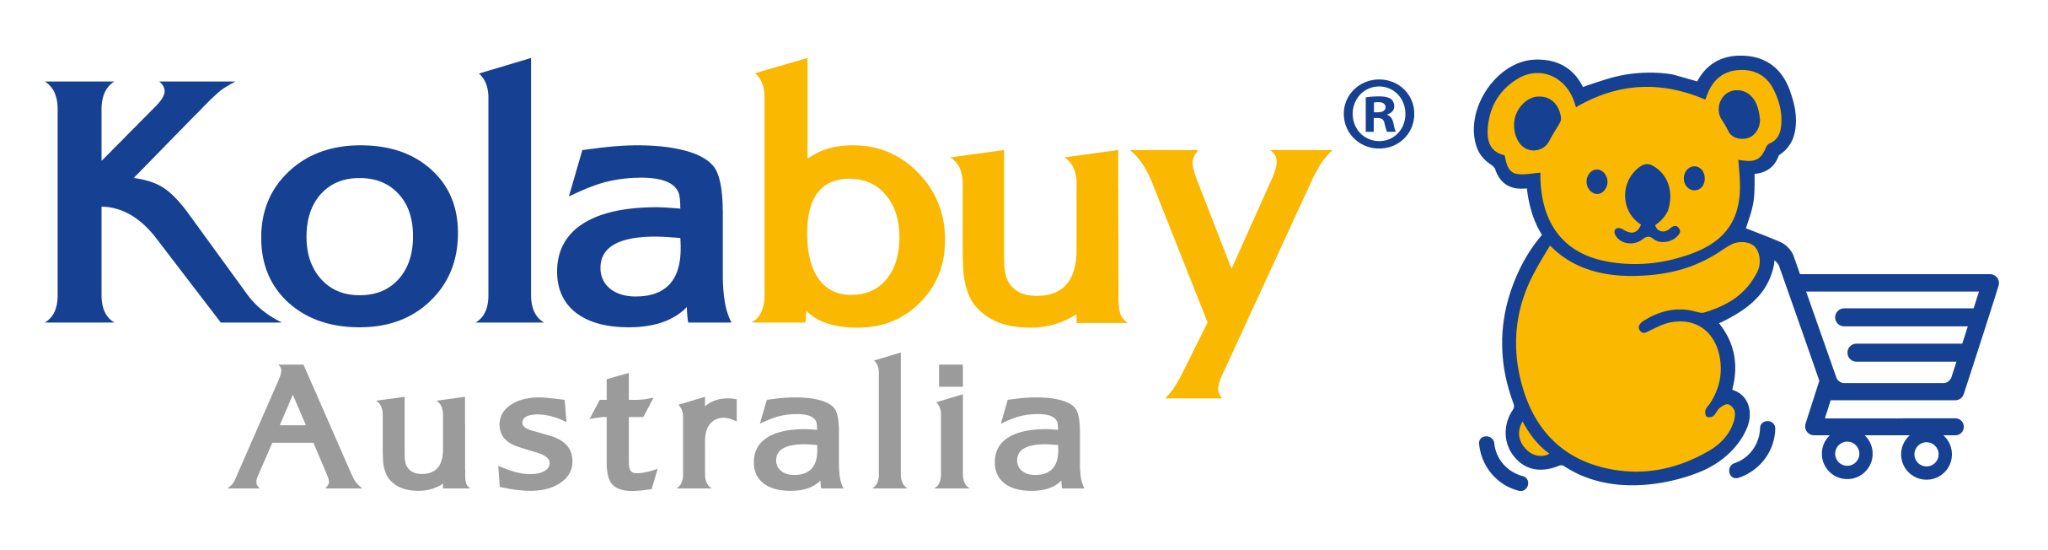 logo Kolabuy Australia®: Authentic & Premium Shopping